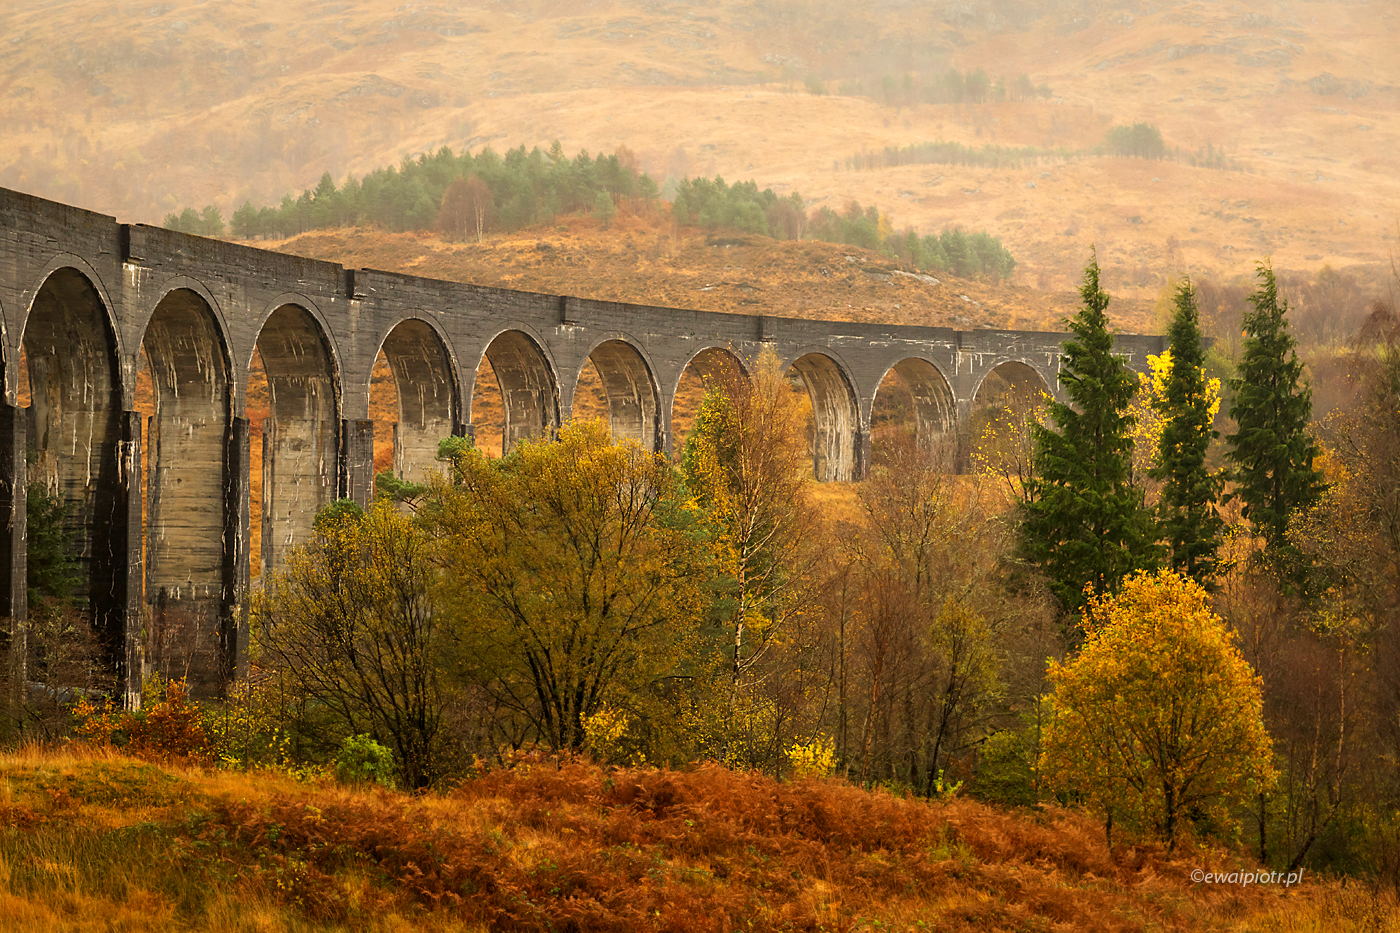 Wiadukt Glenfinnan, Szkocja, wyspa Skye, most kolejowy z filmu Harry Potter